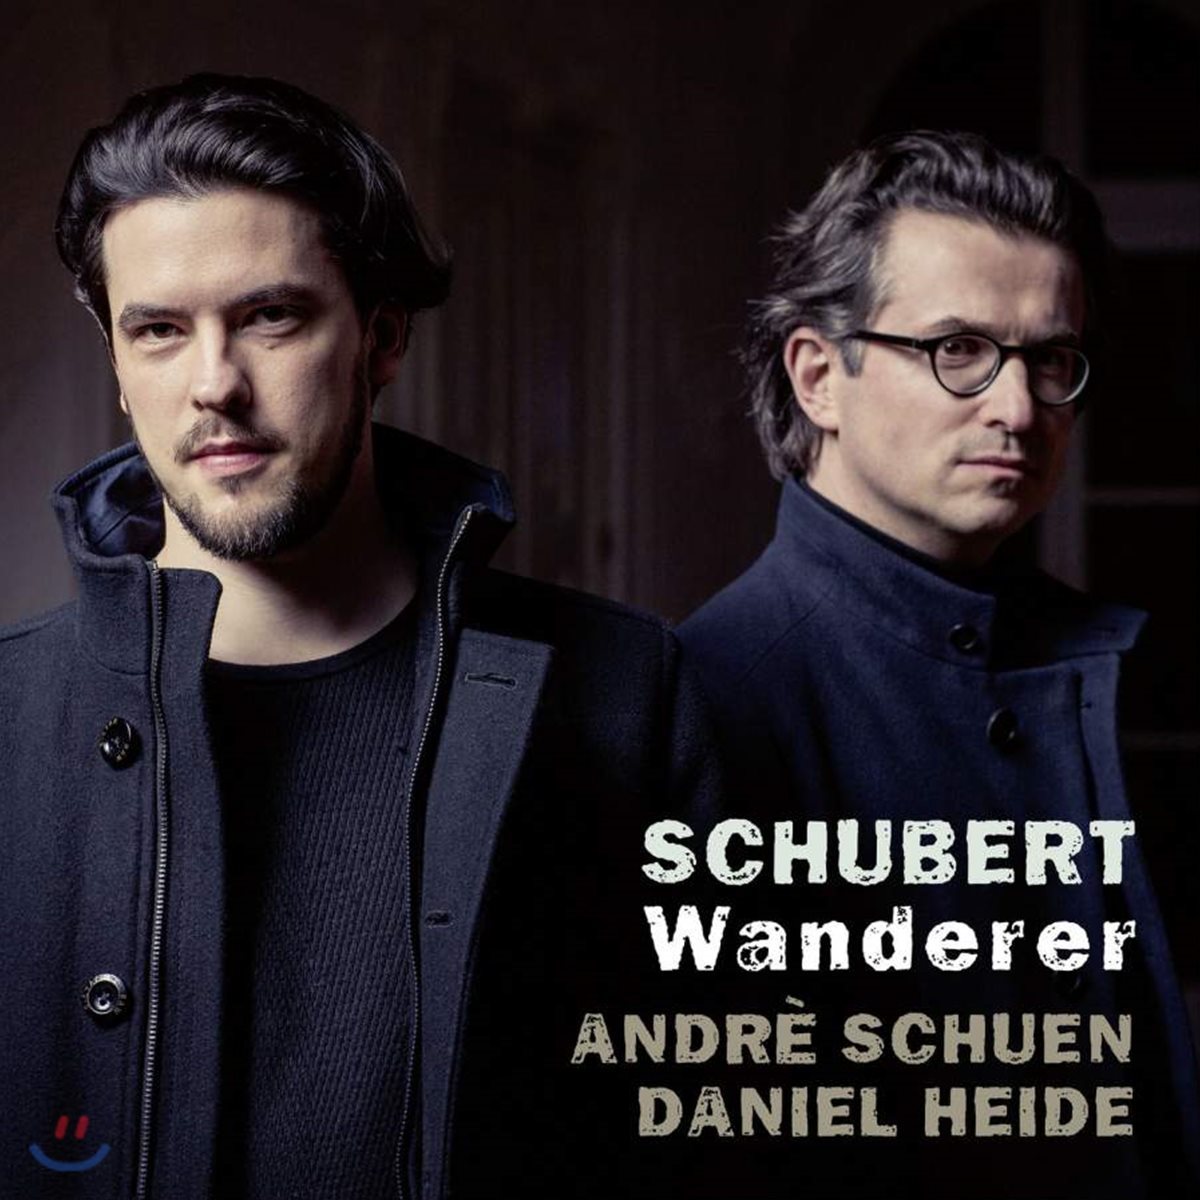 Andre Schuen / Daniel Heide 슈베르트: 가곡집 - 방랑자 (Schubert: Wanderer)